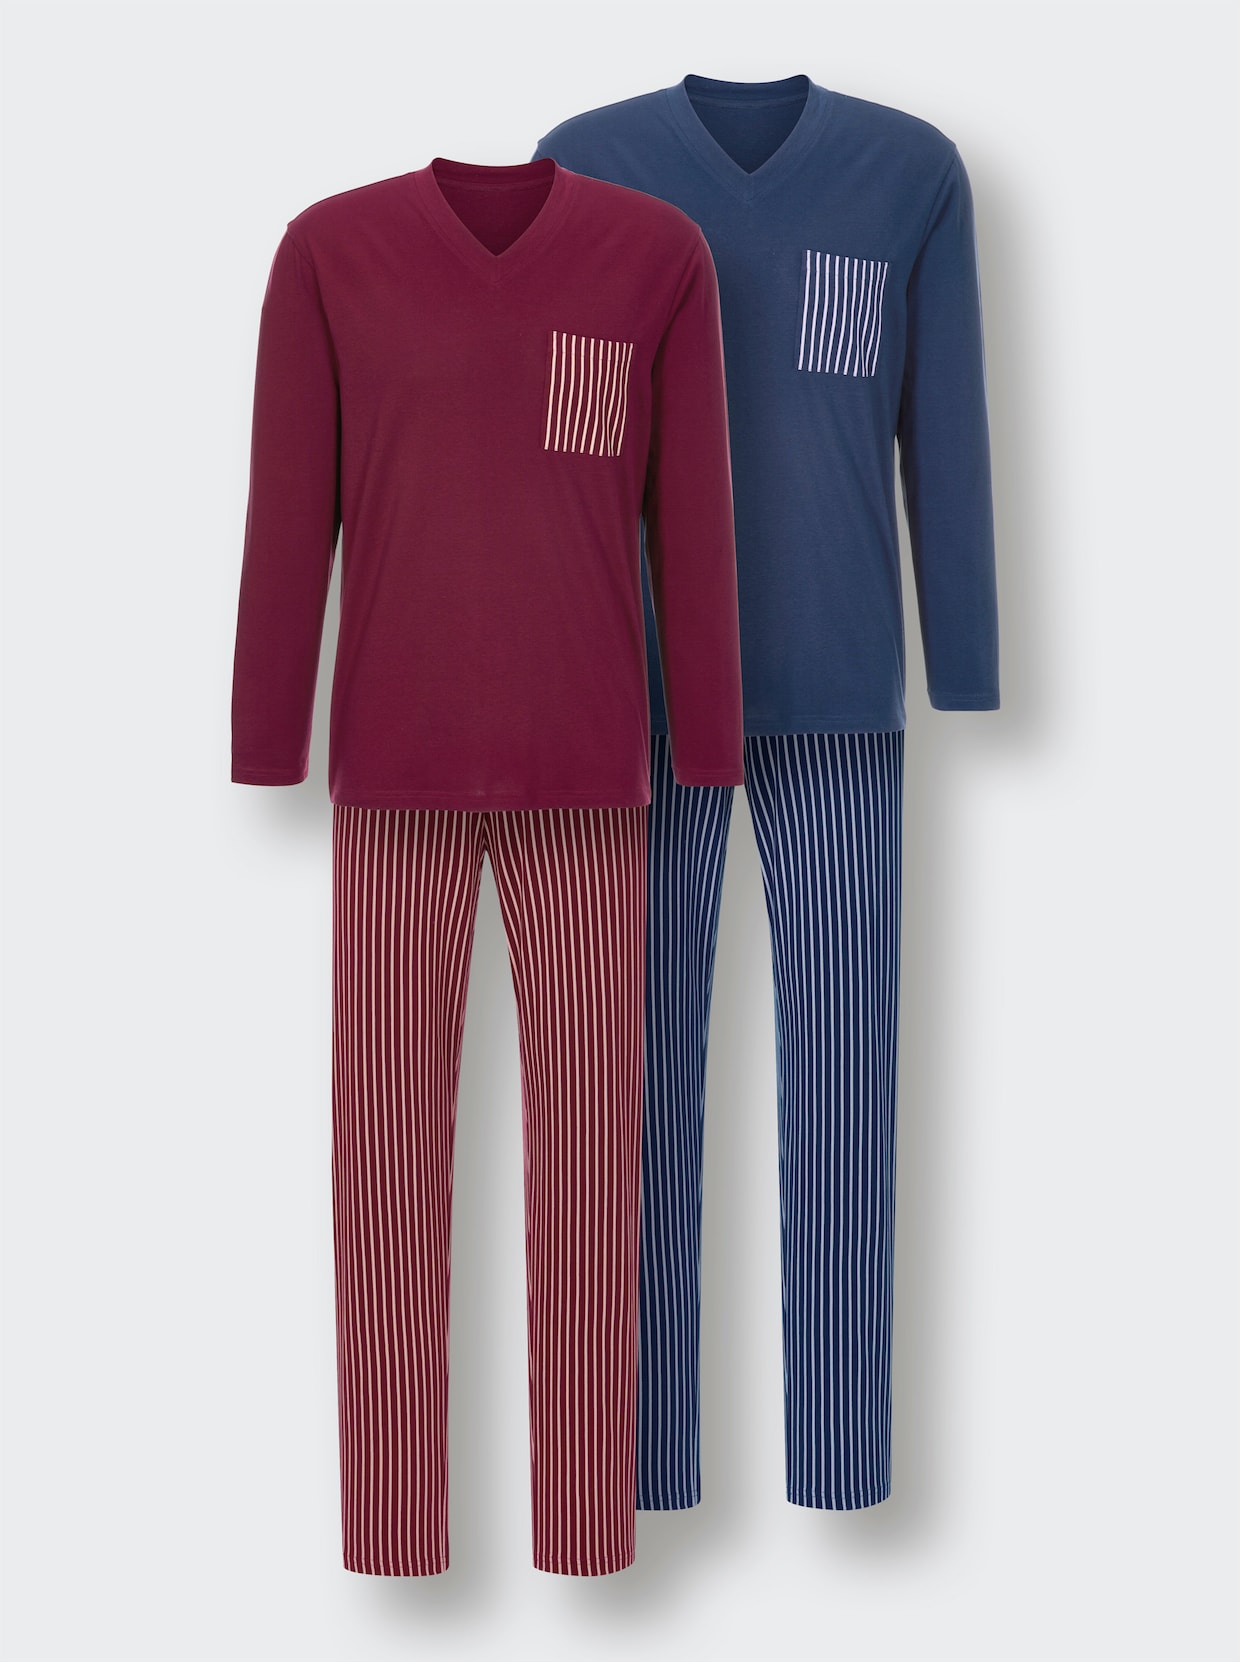 KINGsCLUB Pyjama's - bordeaux + donkerblauw